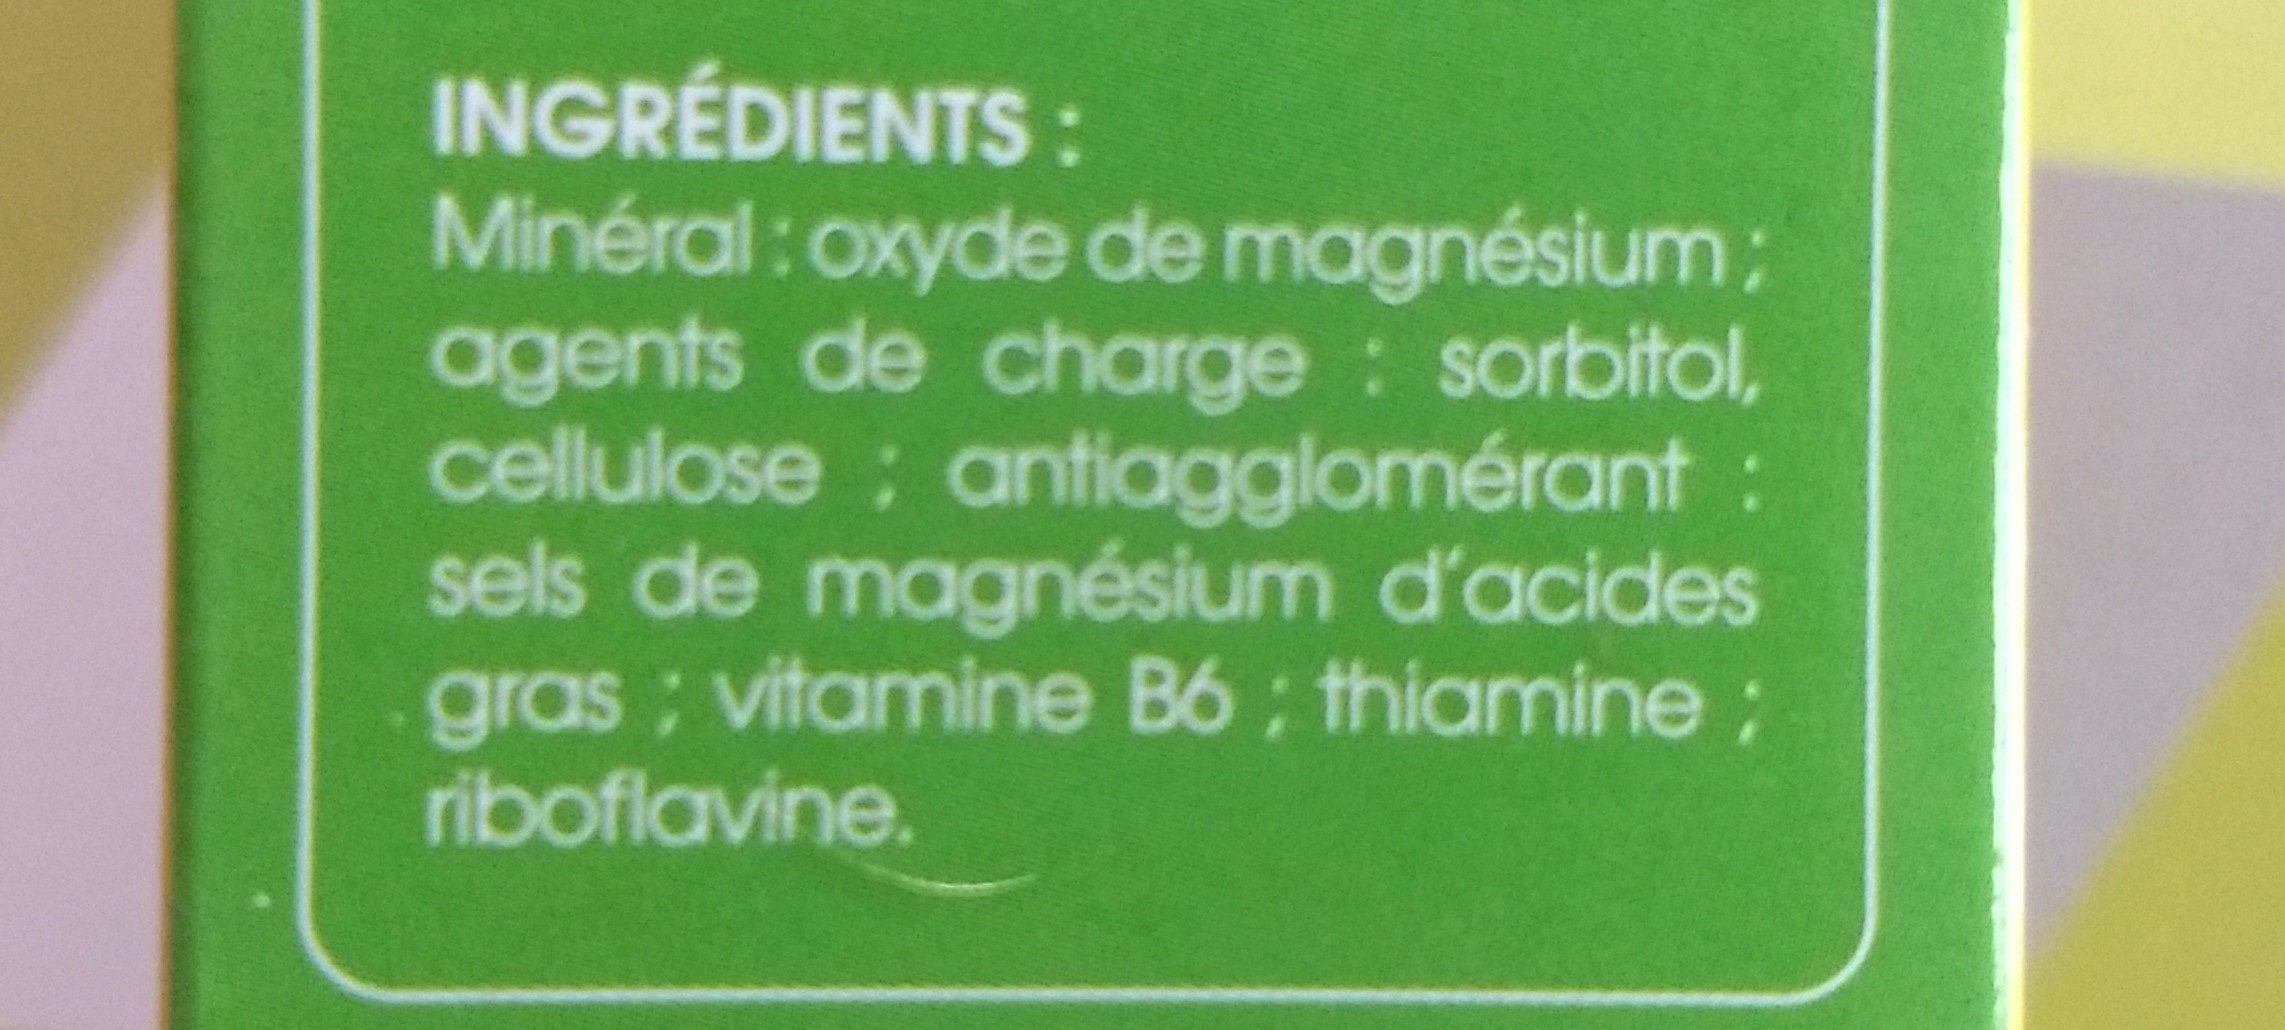 Juva Magnesium+b1 B2 B6 - Ingredients - fr